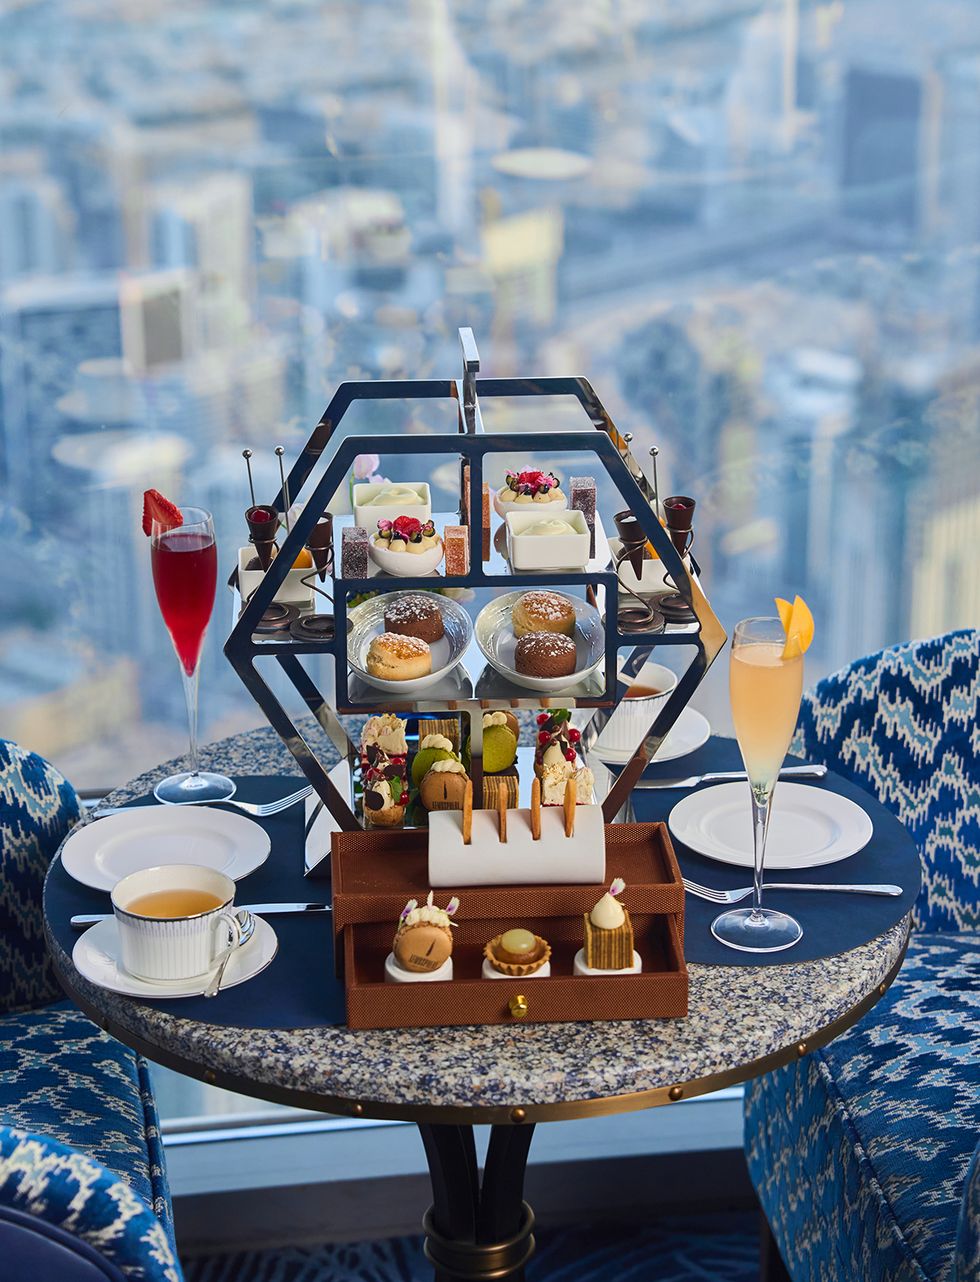 Cuisine at Atmosphere Restaurant at Burj Khalifa Raskasilos in Dubai